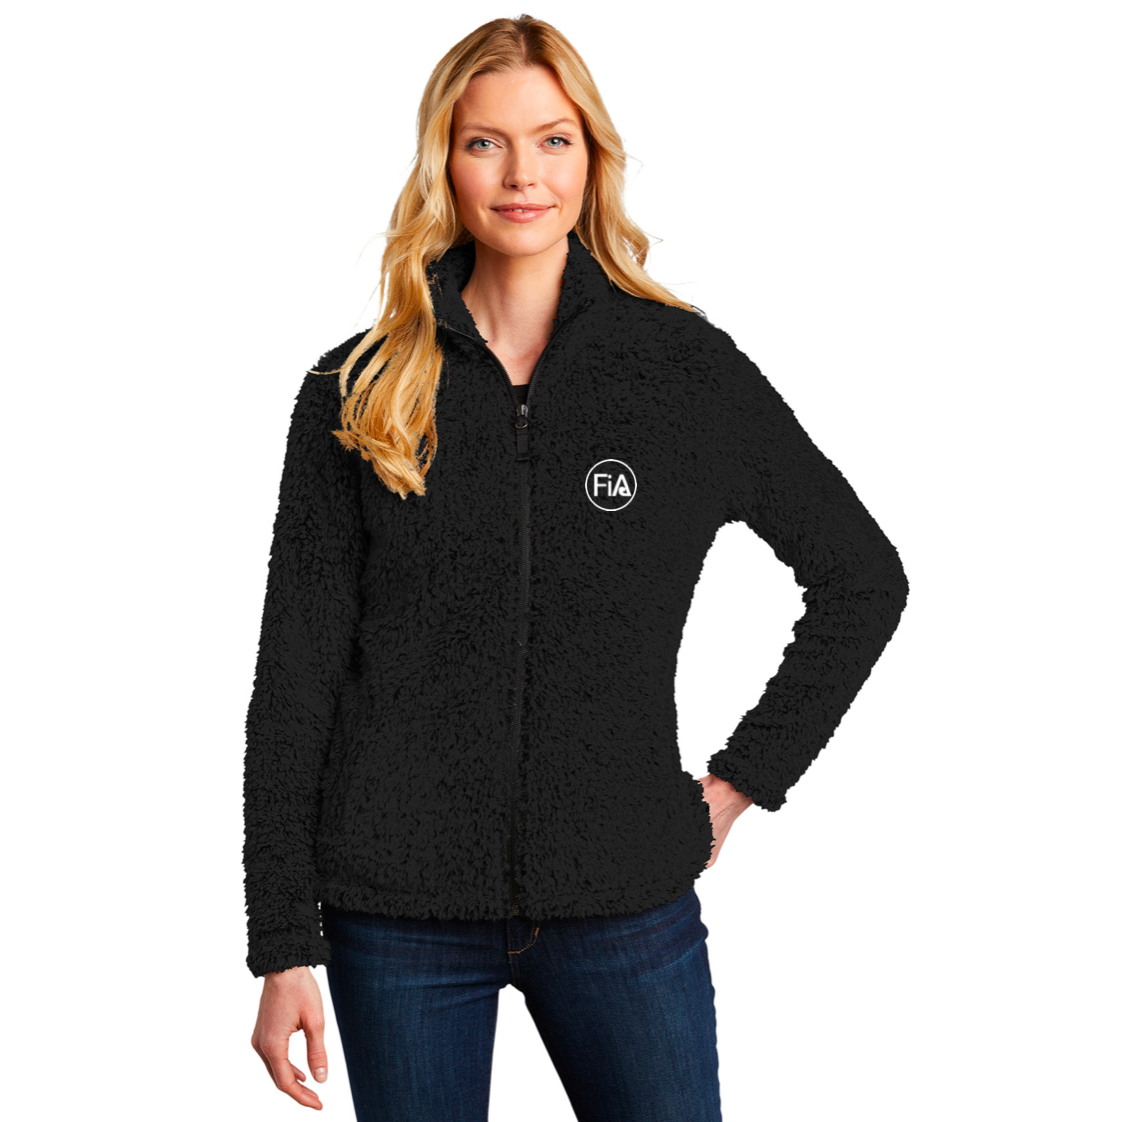 FiA Port Authority Ladies Cozy Fleece Jacket - Made to Order